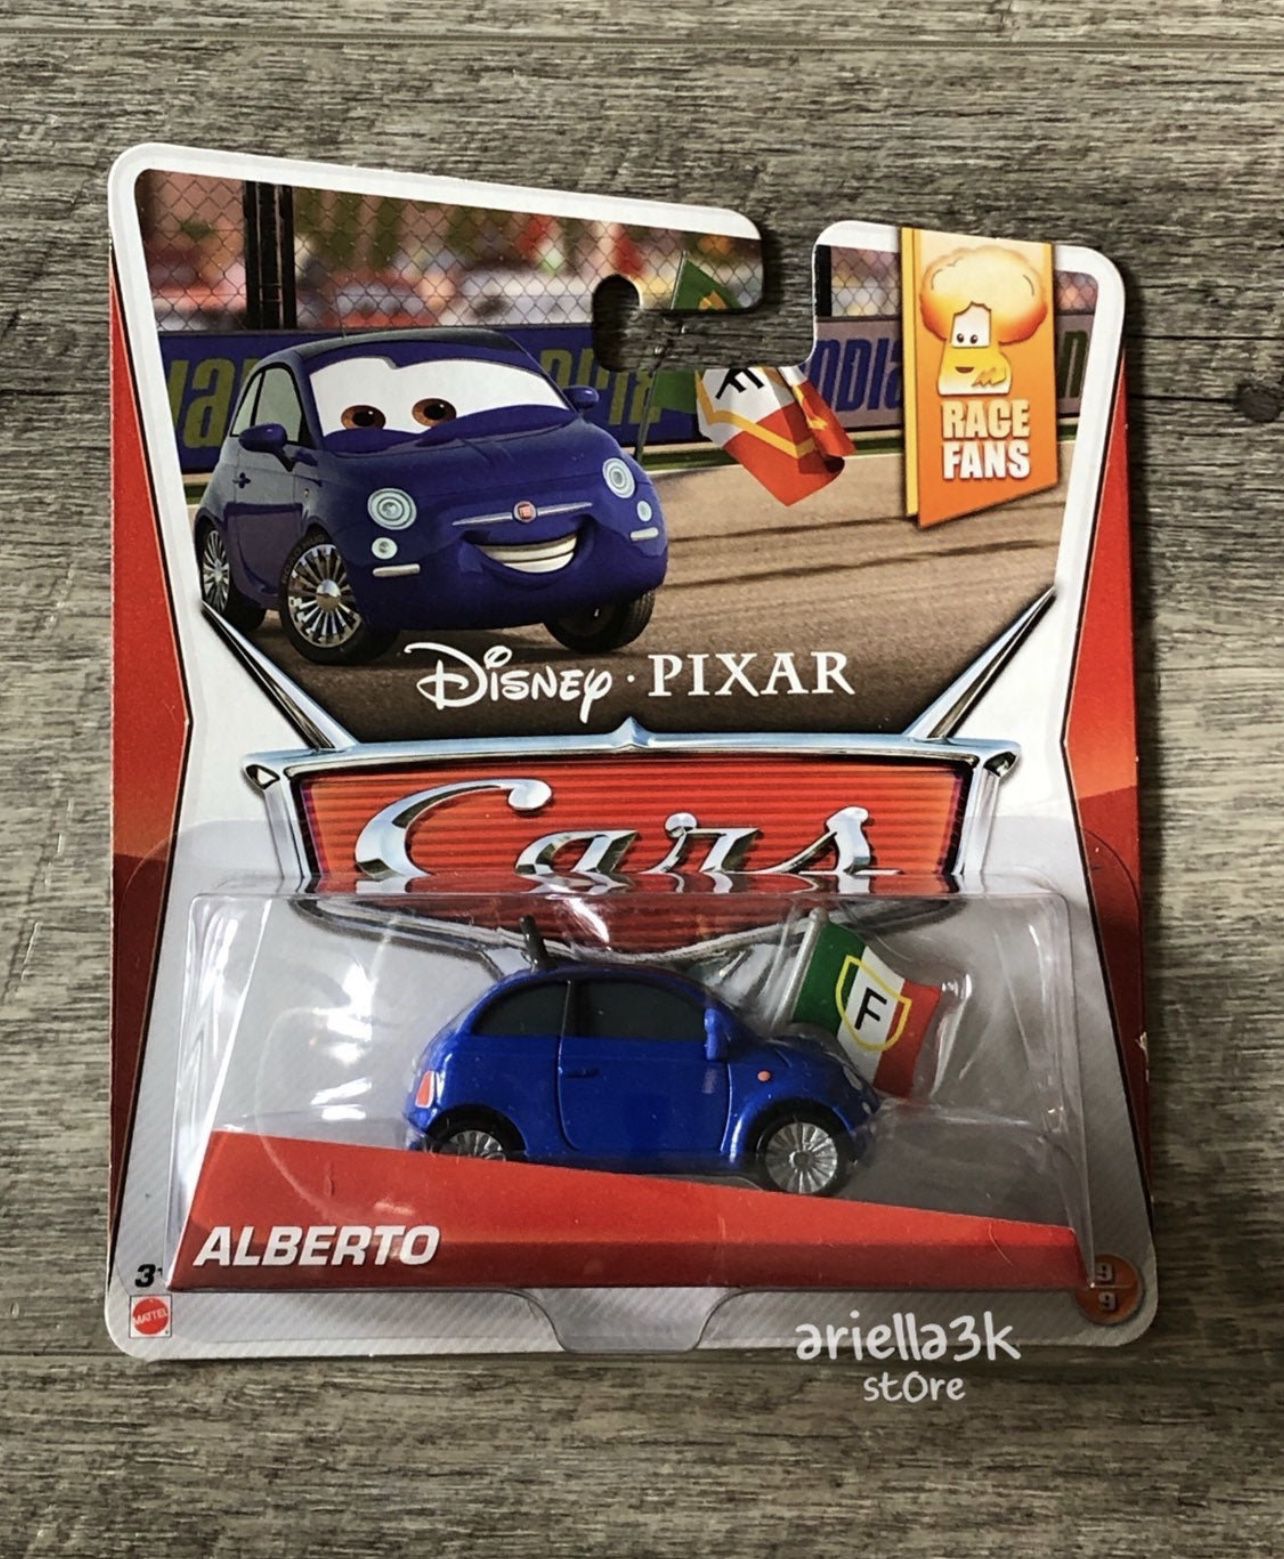 Disney Pixar Cars 2 Alberto  Fiat - Race Fans collection #9 of 9 by Mattel